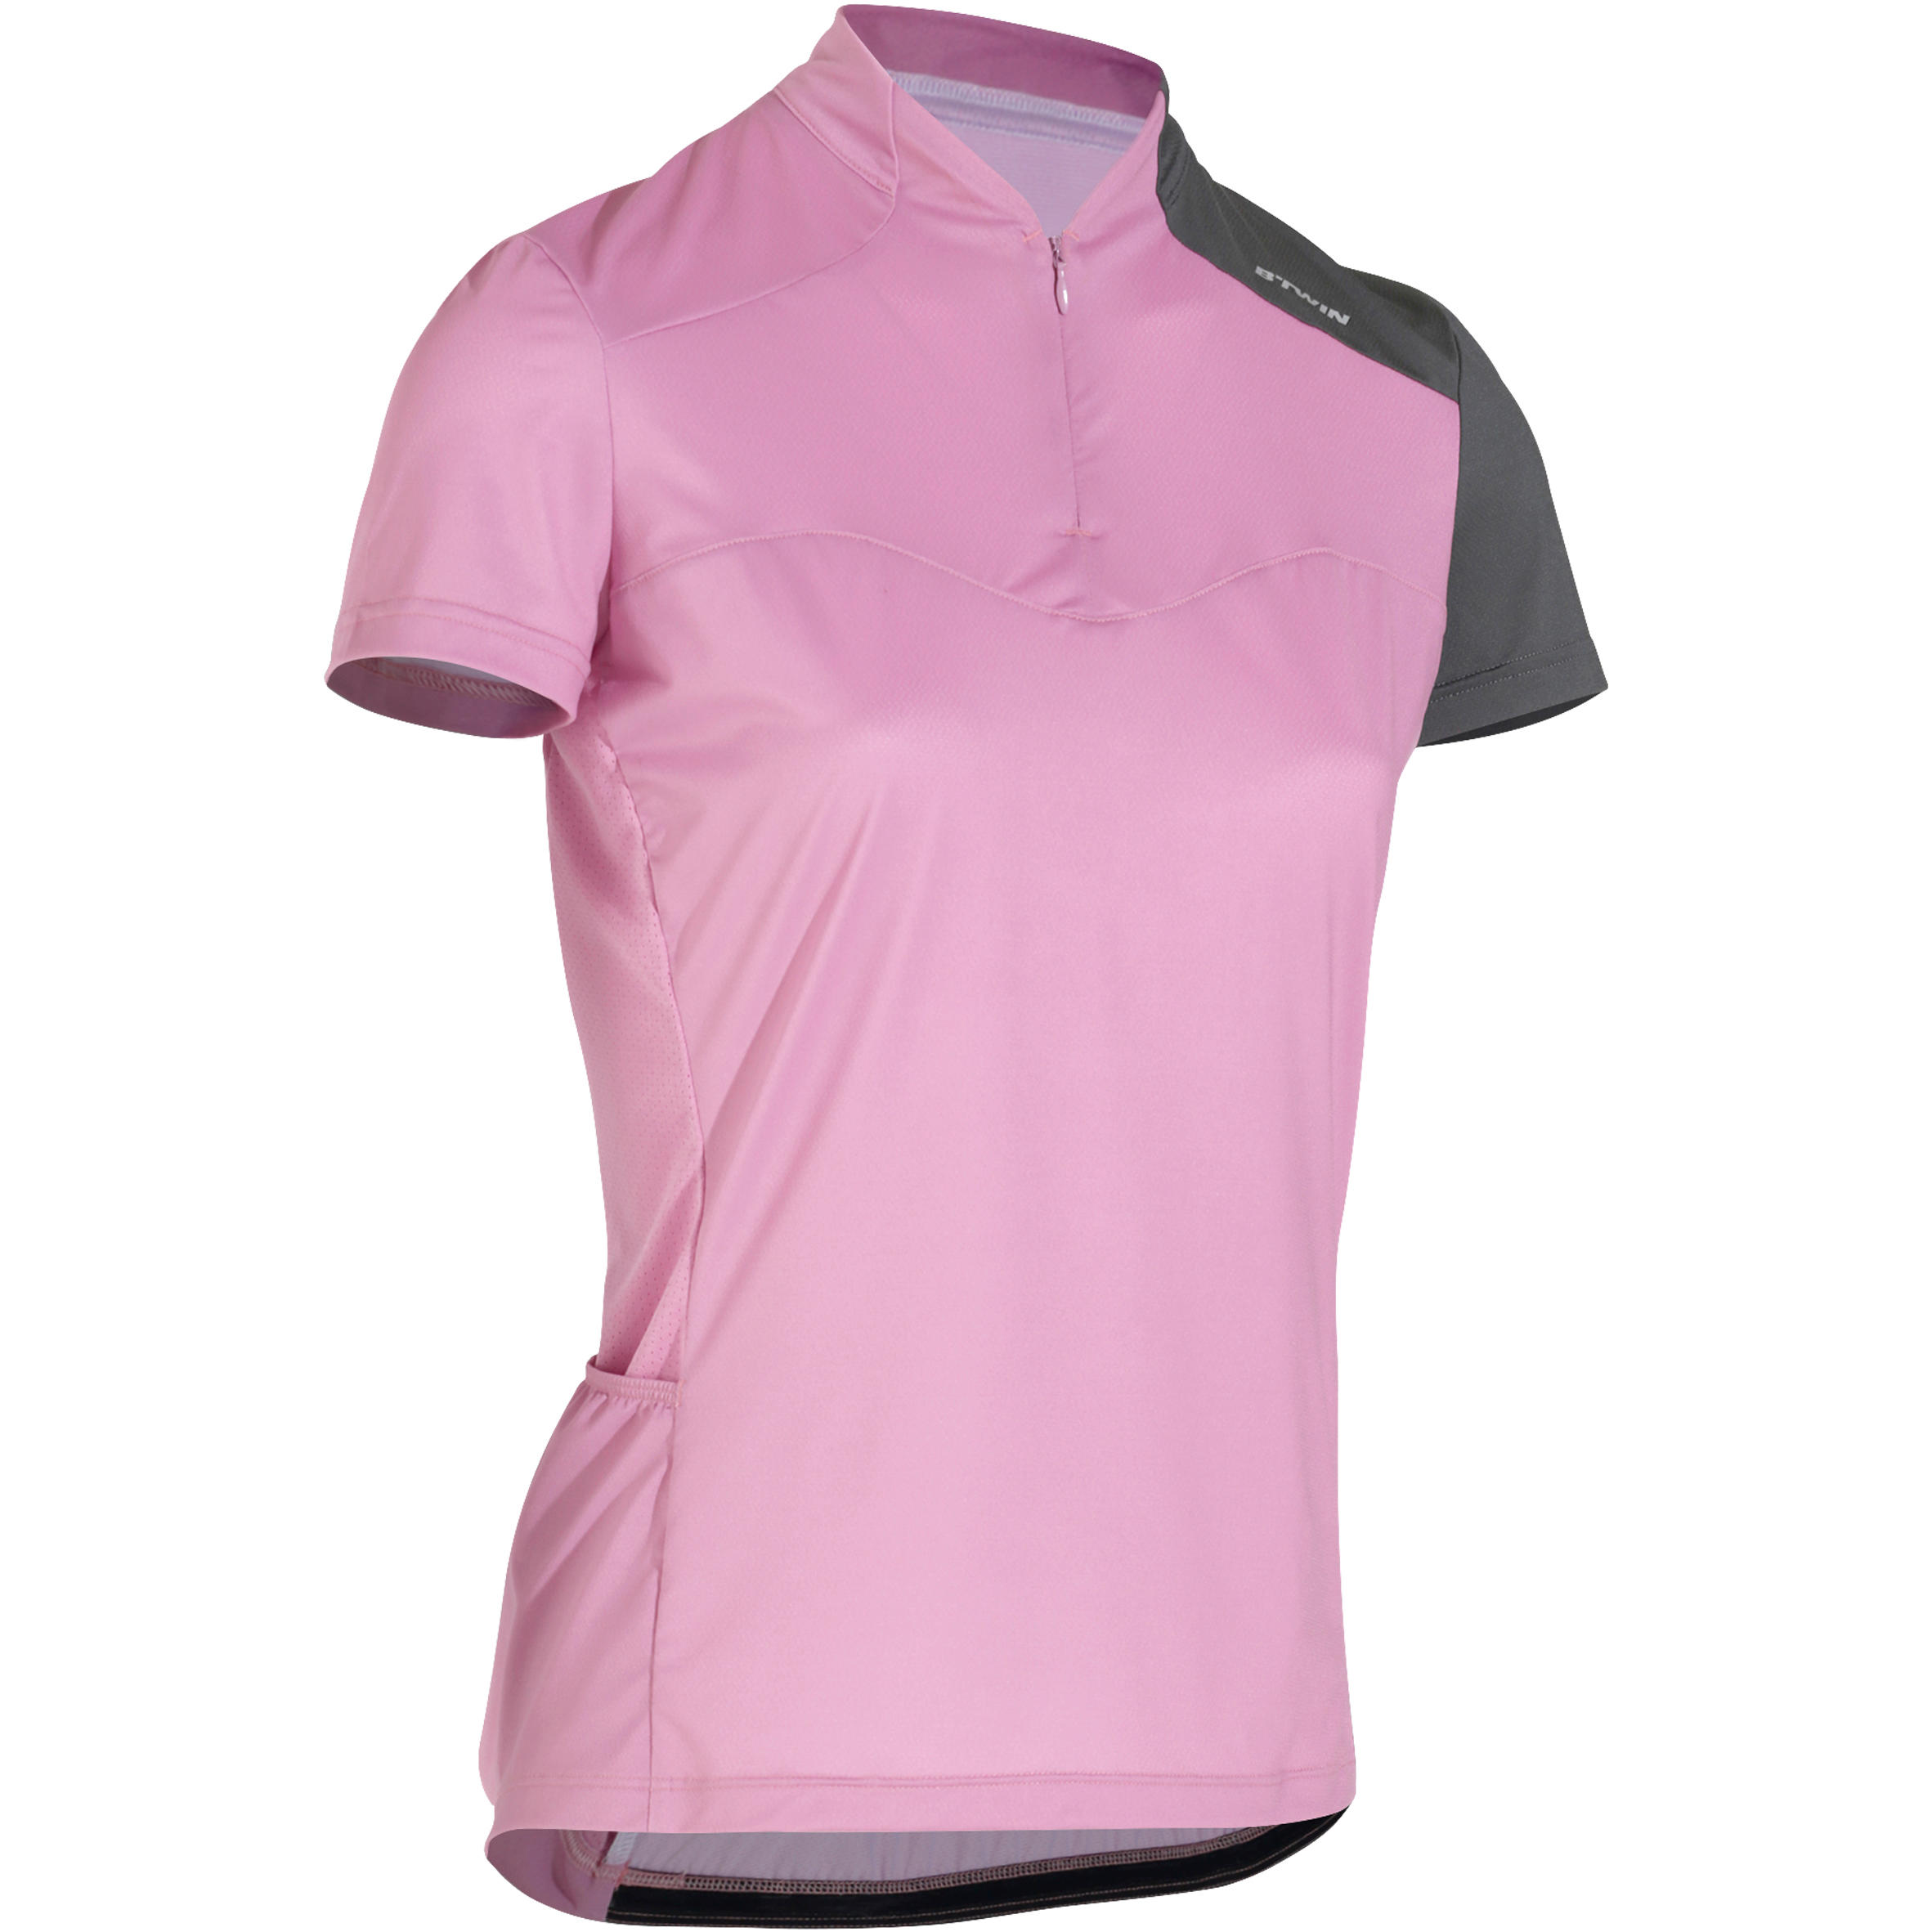 TRIBAN 500 Women's Short Sleeve Cycling Jersey - Pink/Grey